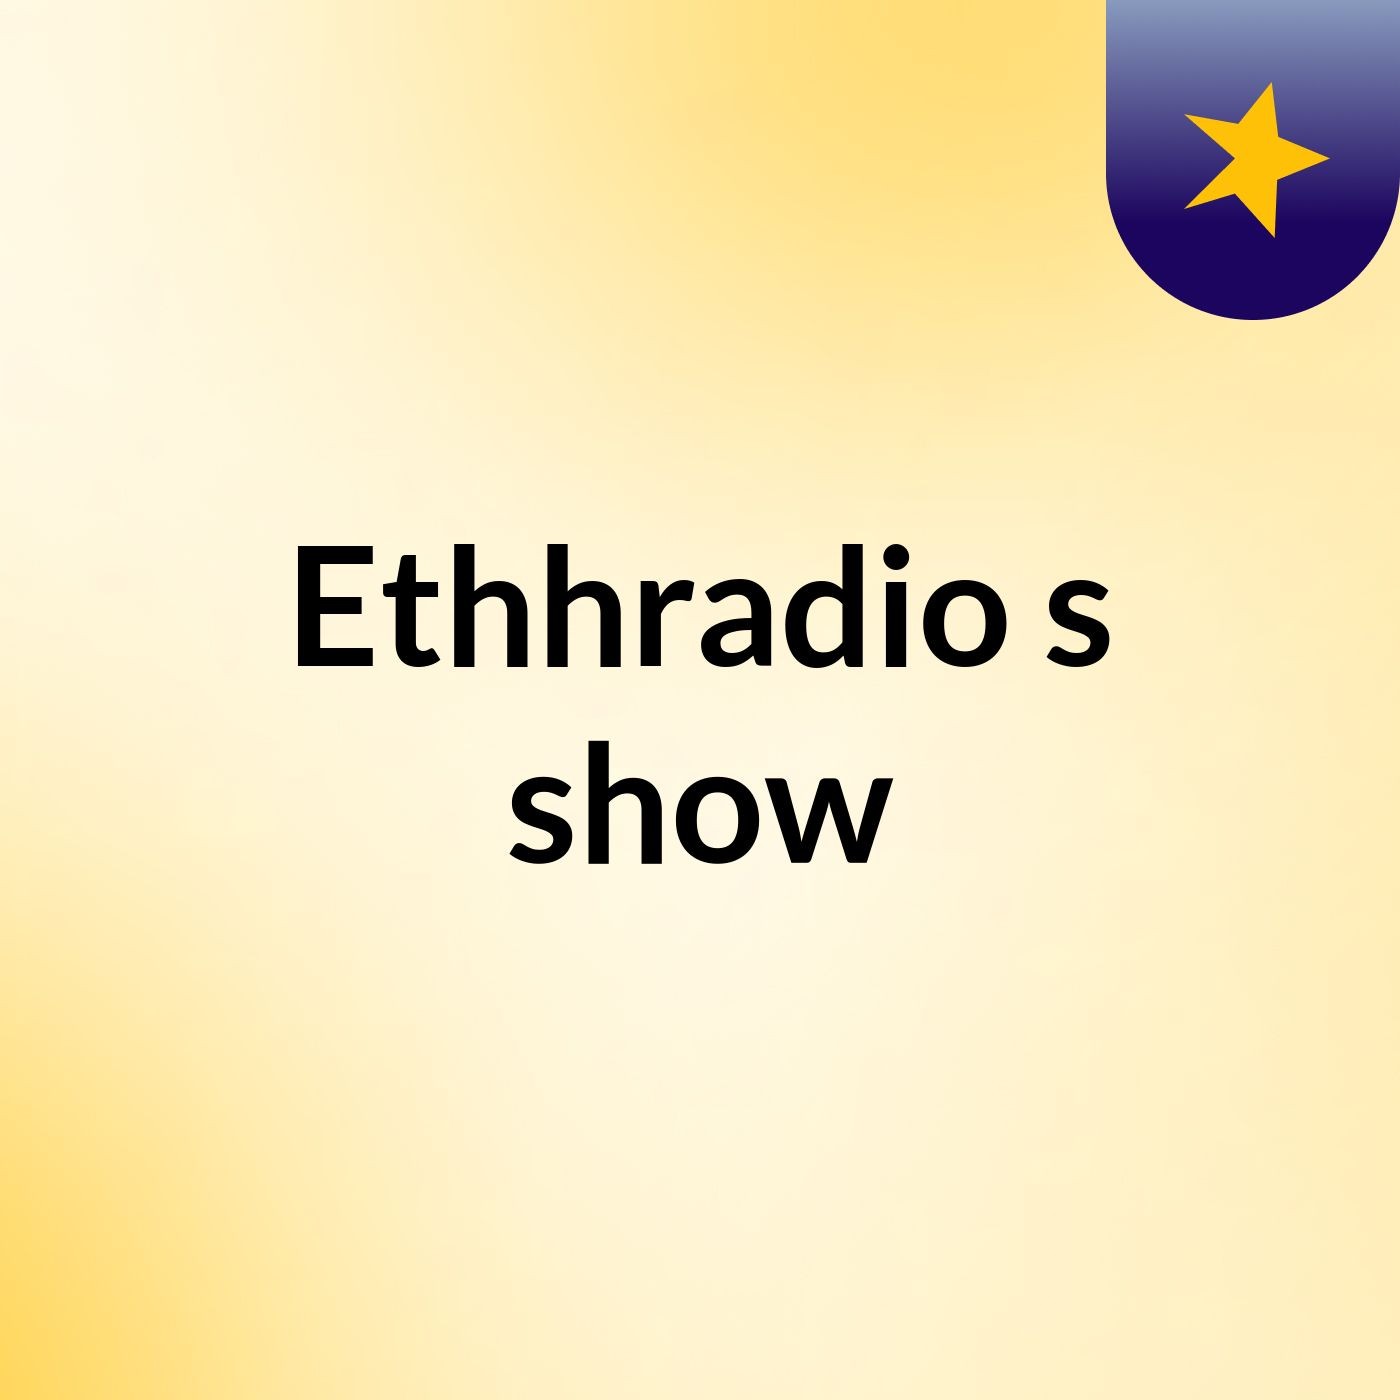 Ethhradio's show